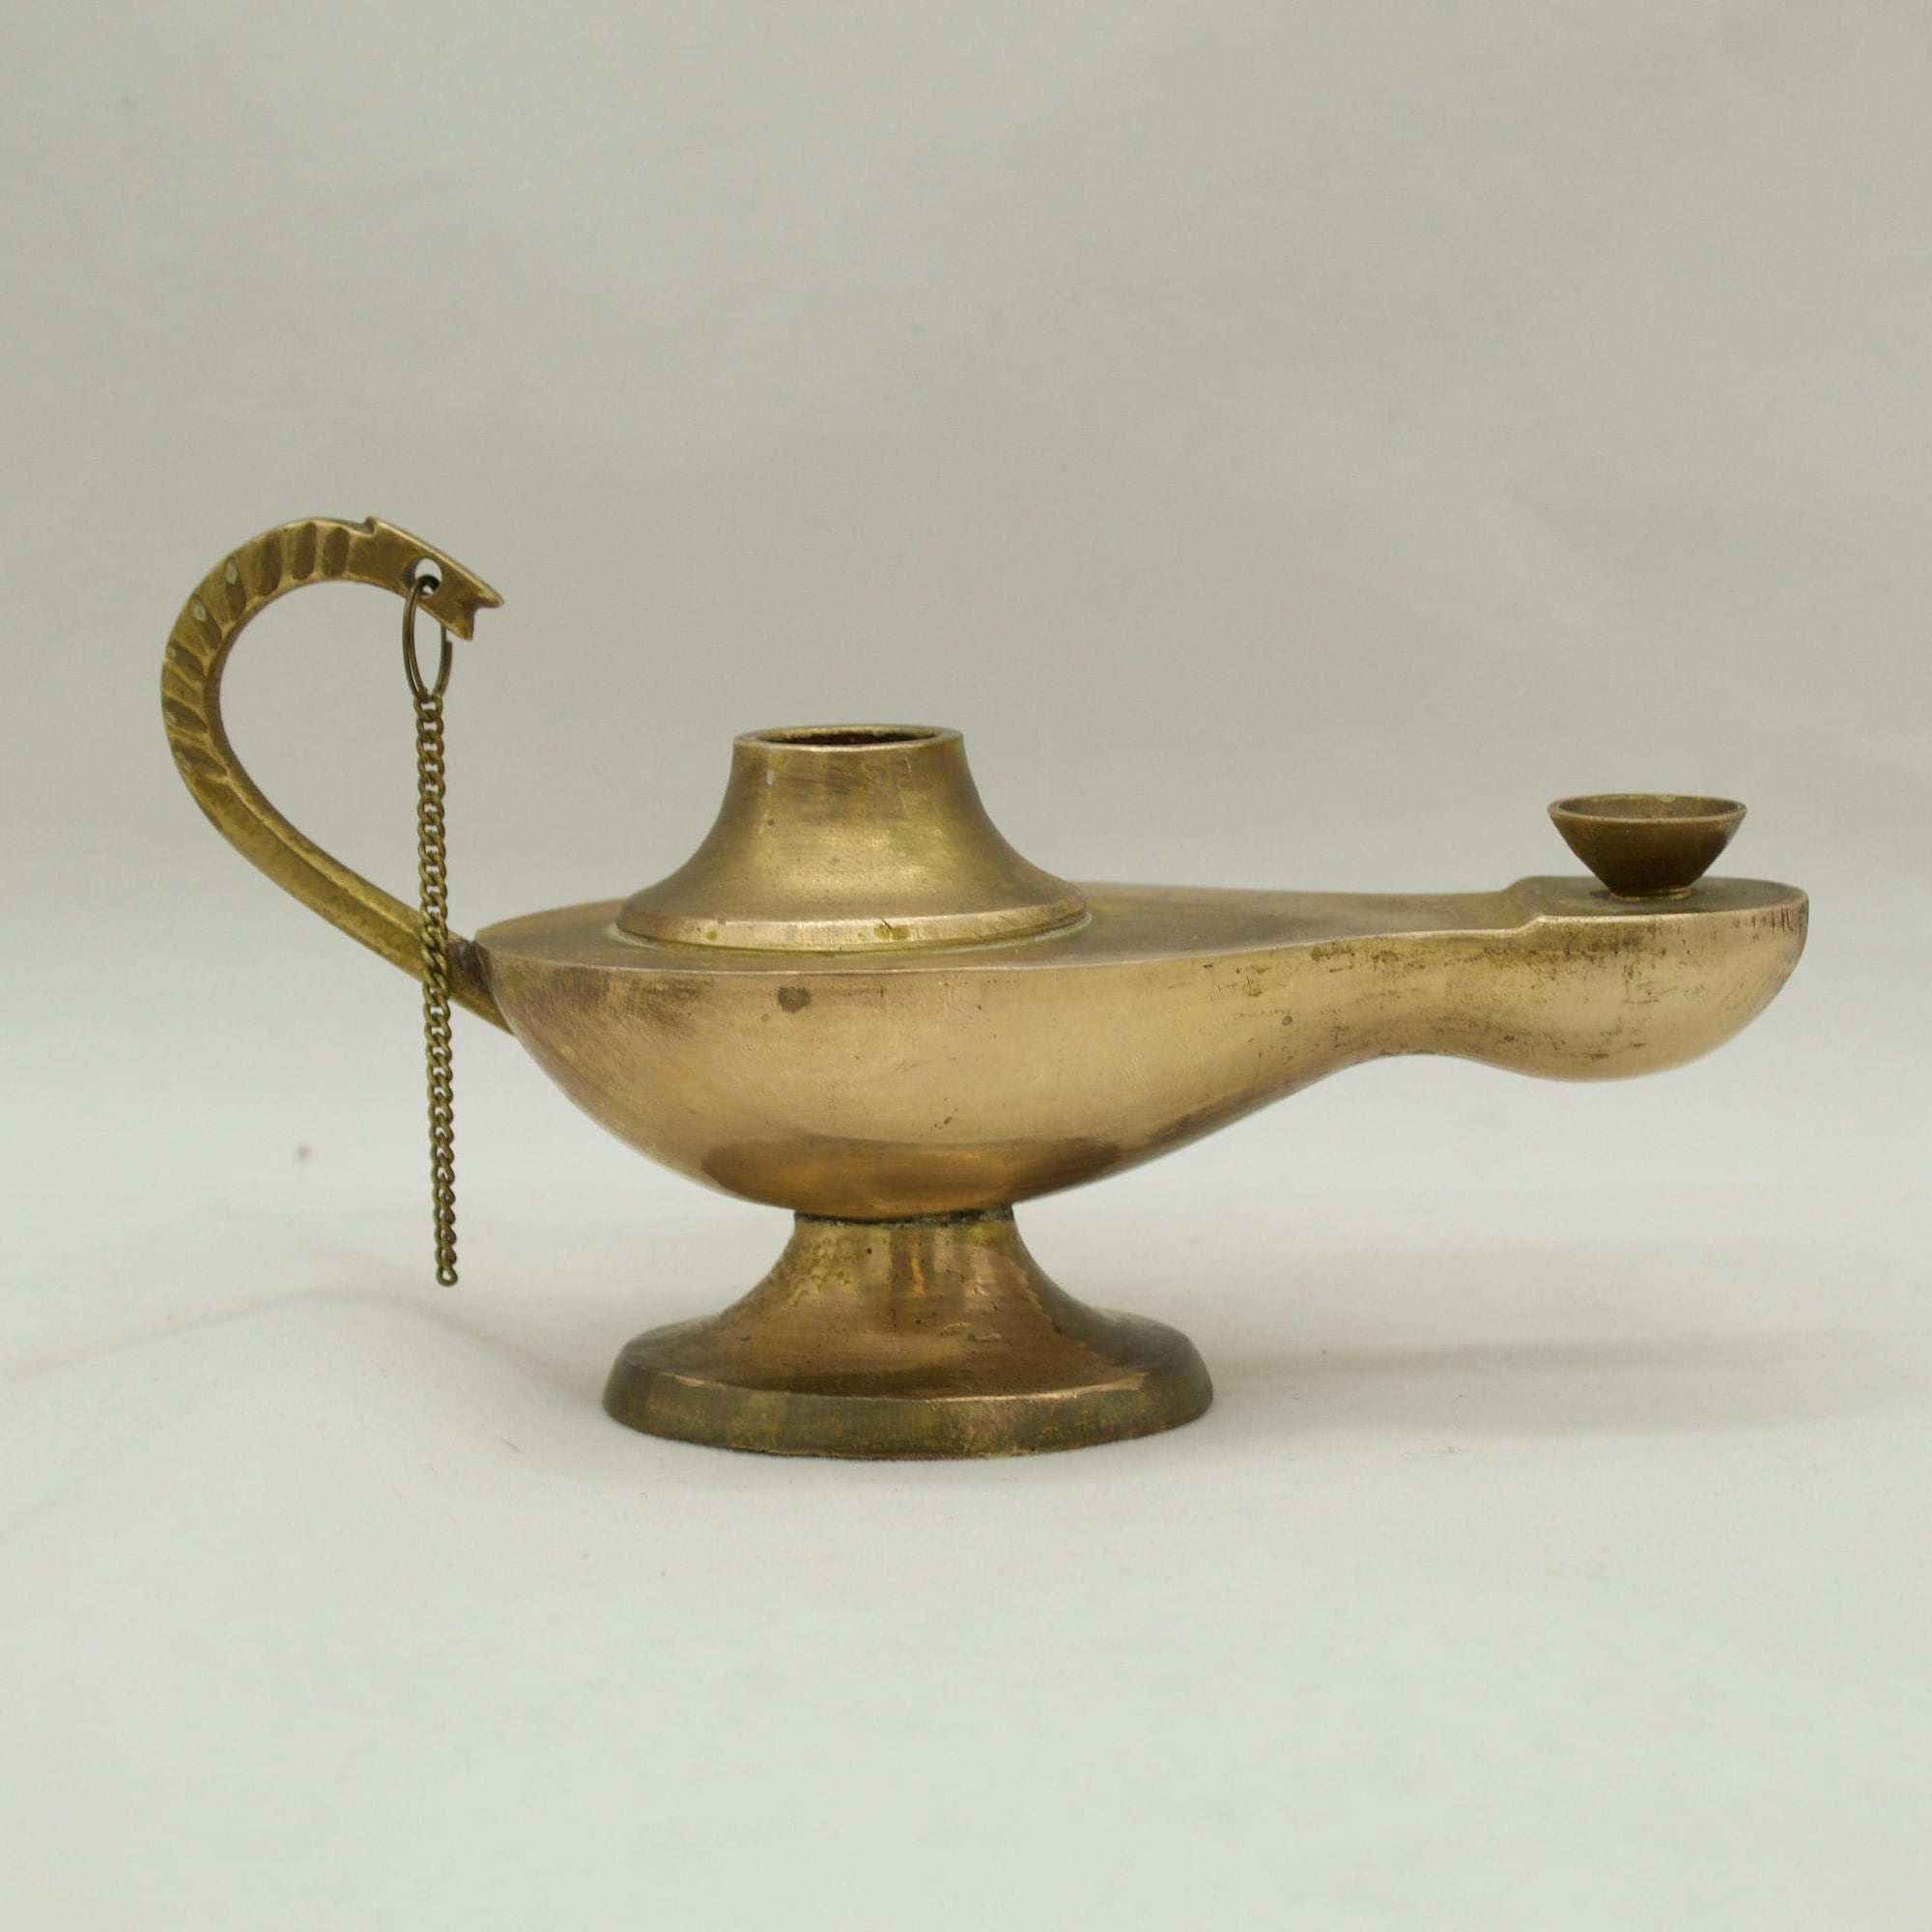 Miniature Brass Genie Lamp Isolated On Stock Photo 1351851